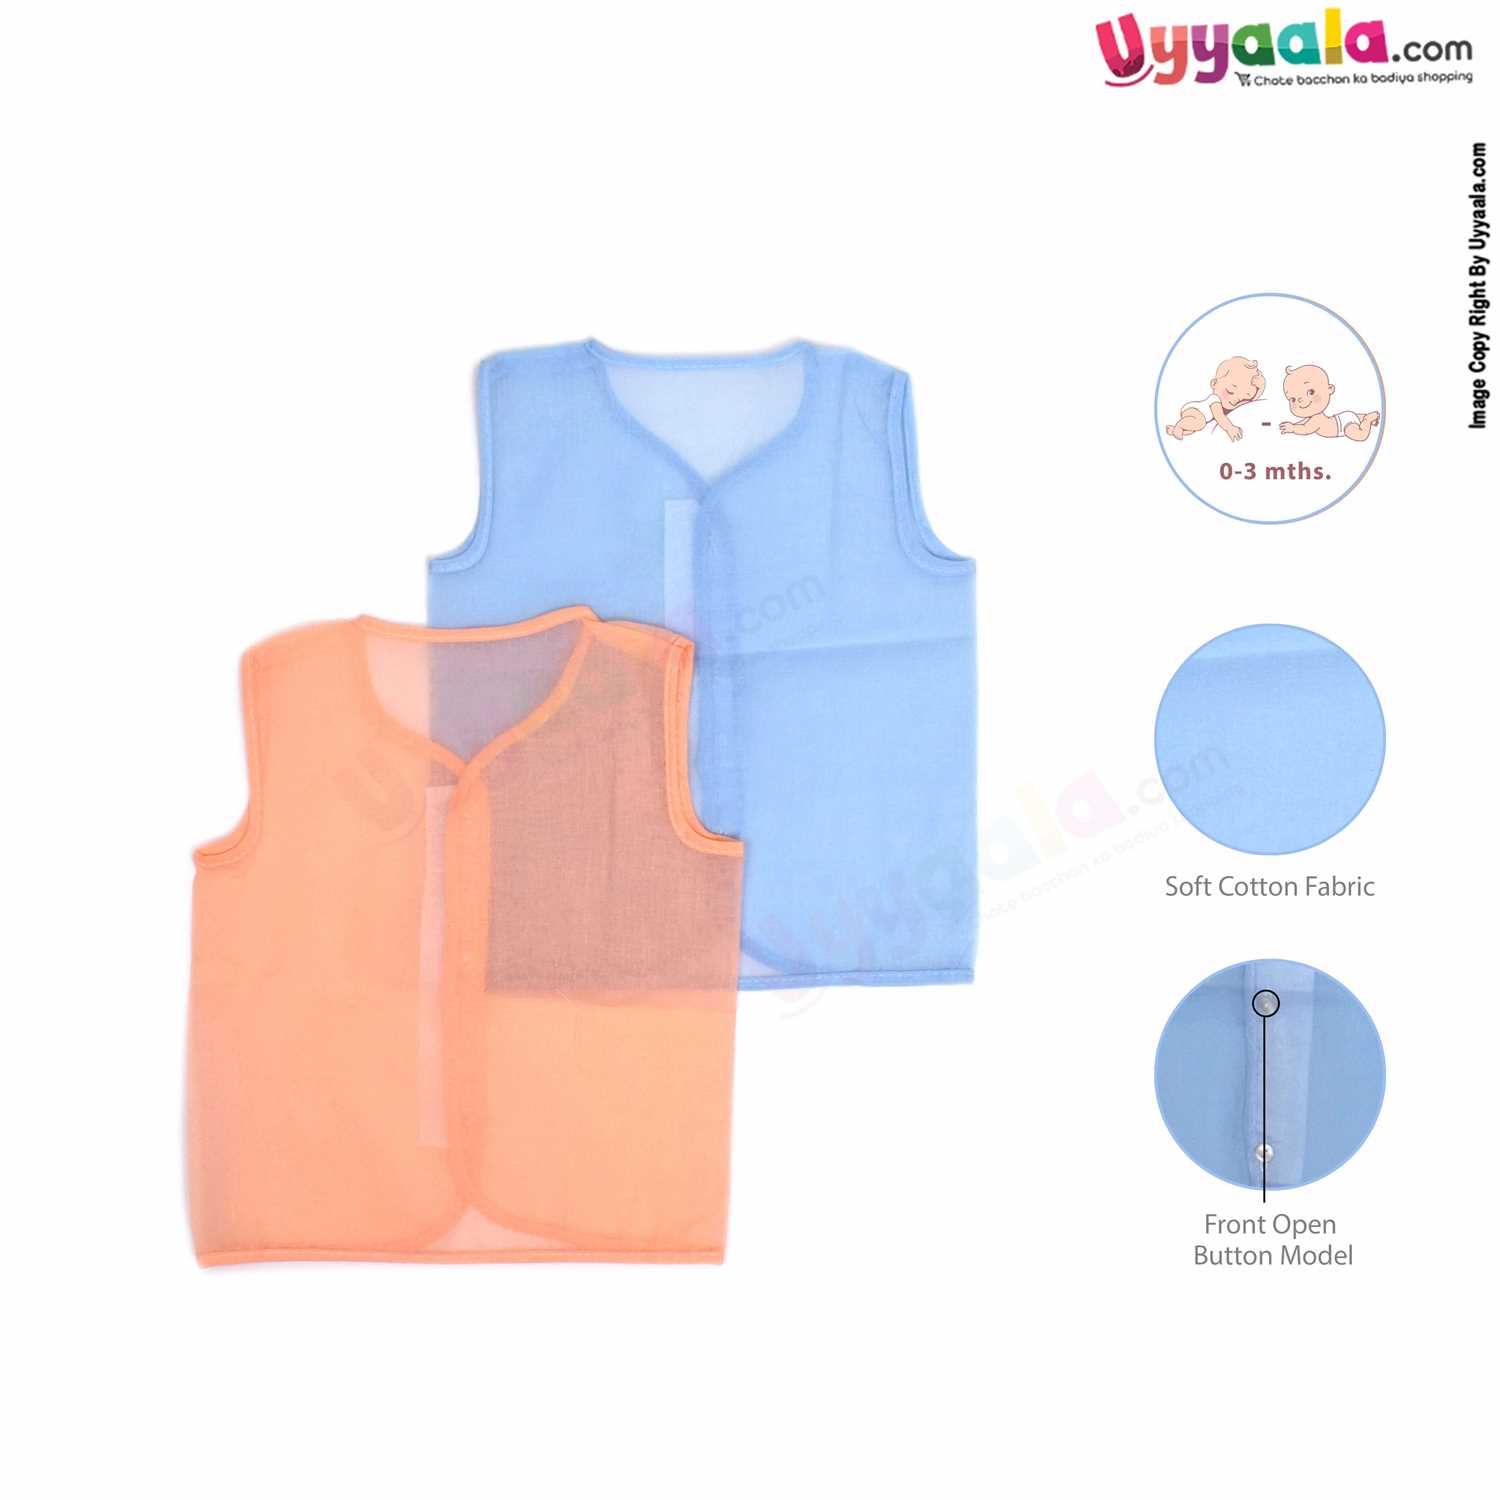 SNUG UP Sleeveless Baby Jabla Set, Front Opening Button Model, Premium Quality Cotton Baby Wear, (0-3M), 2Pack - Orange & Blue